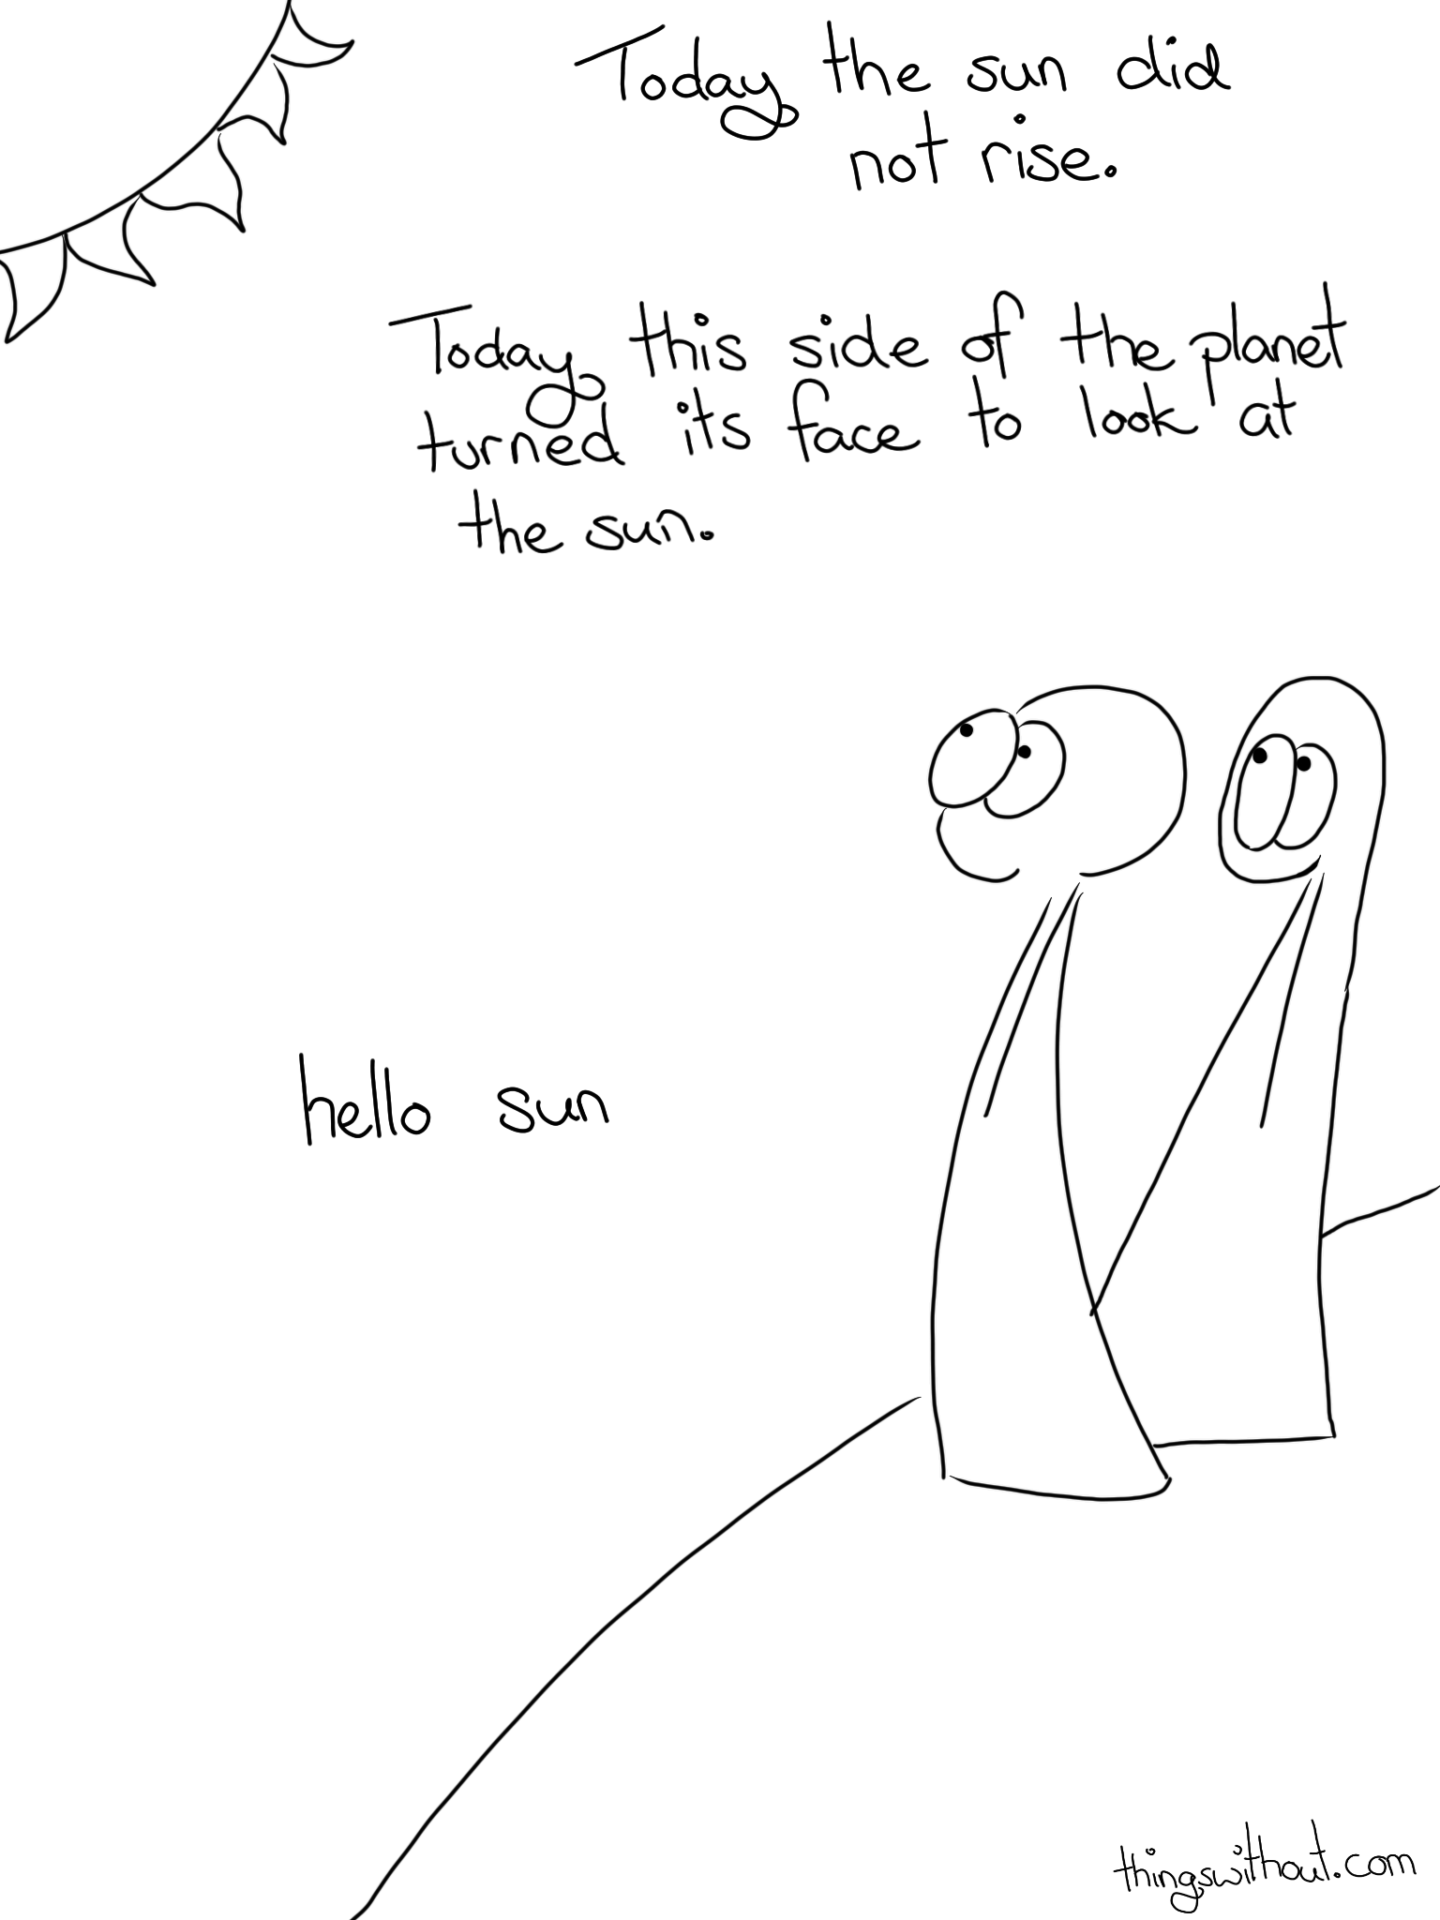 335: Sun Did Not Rise